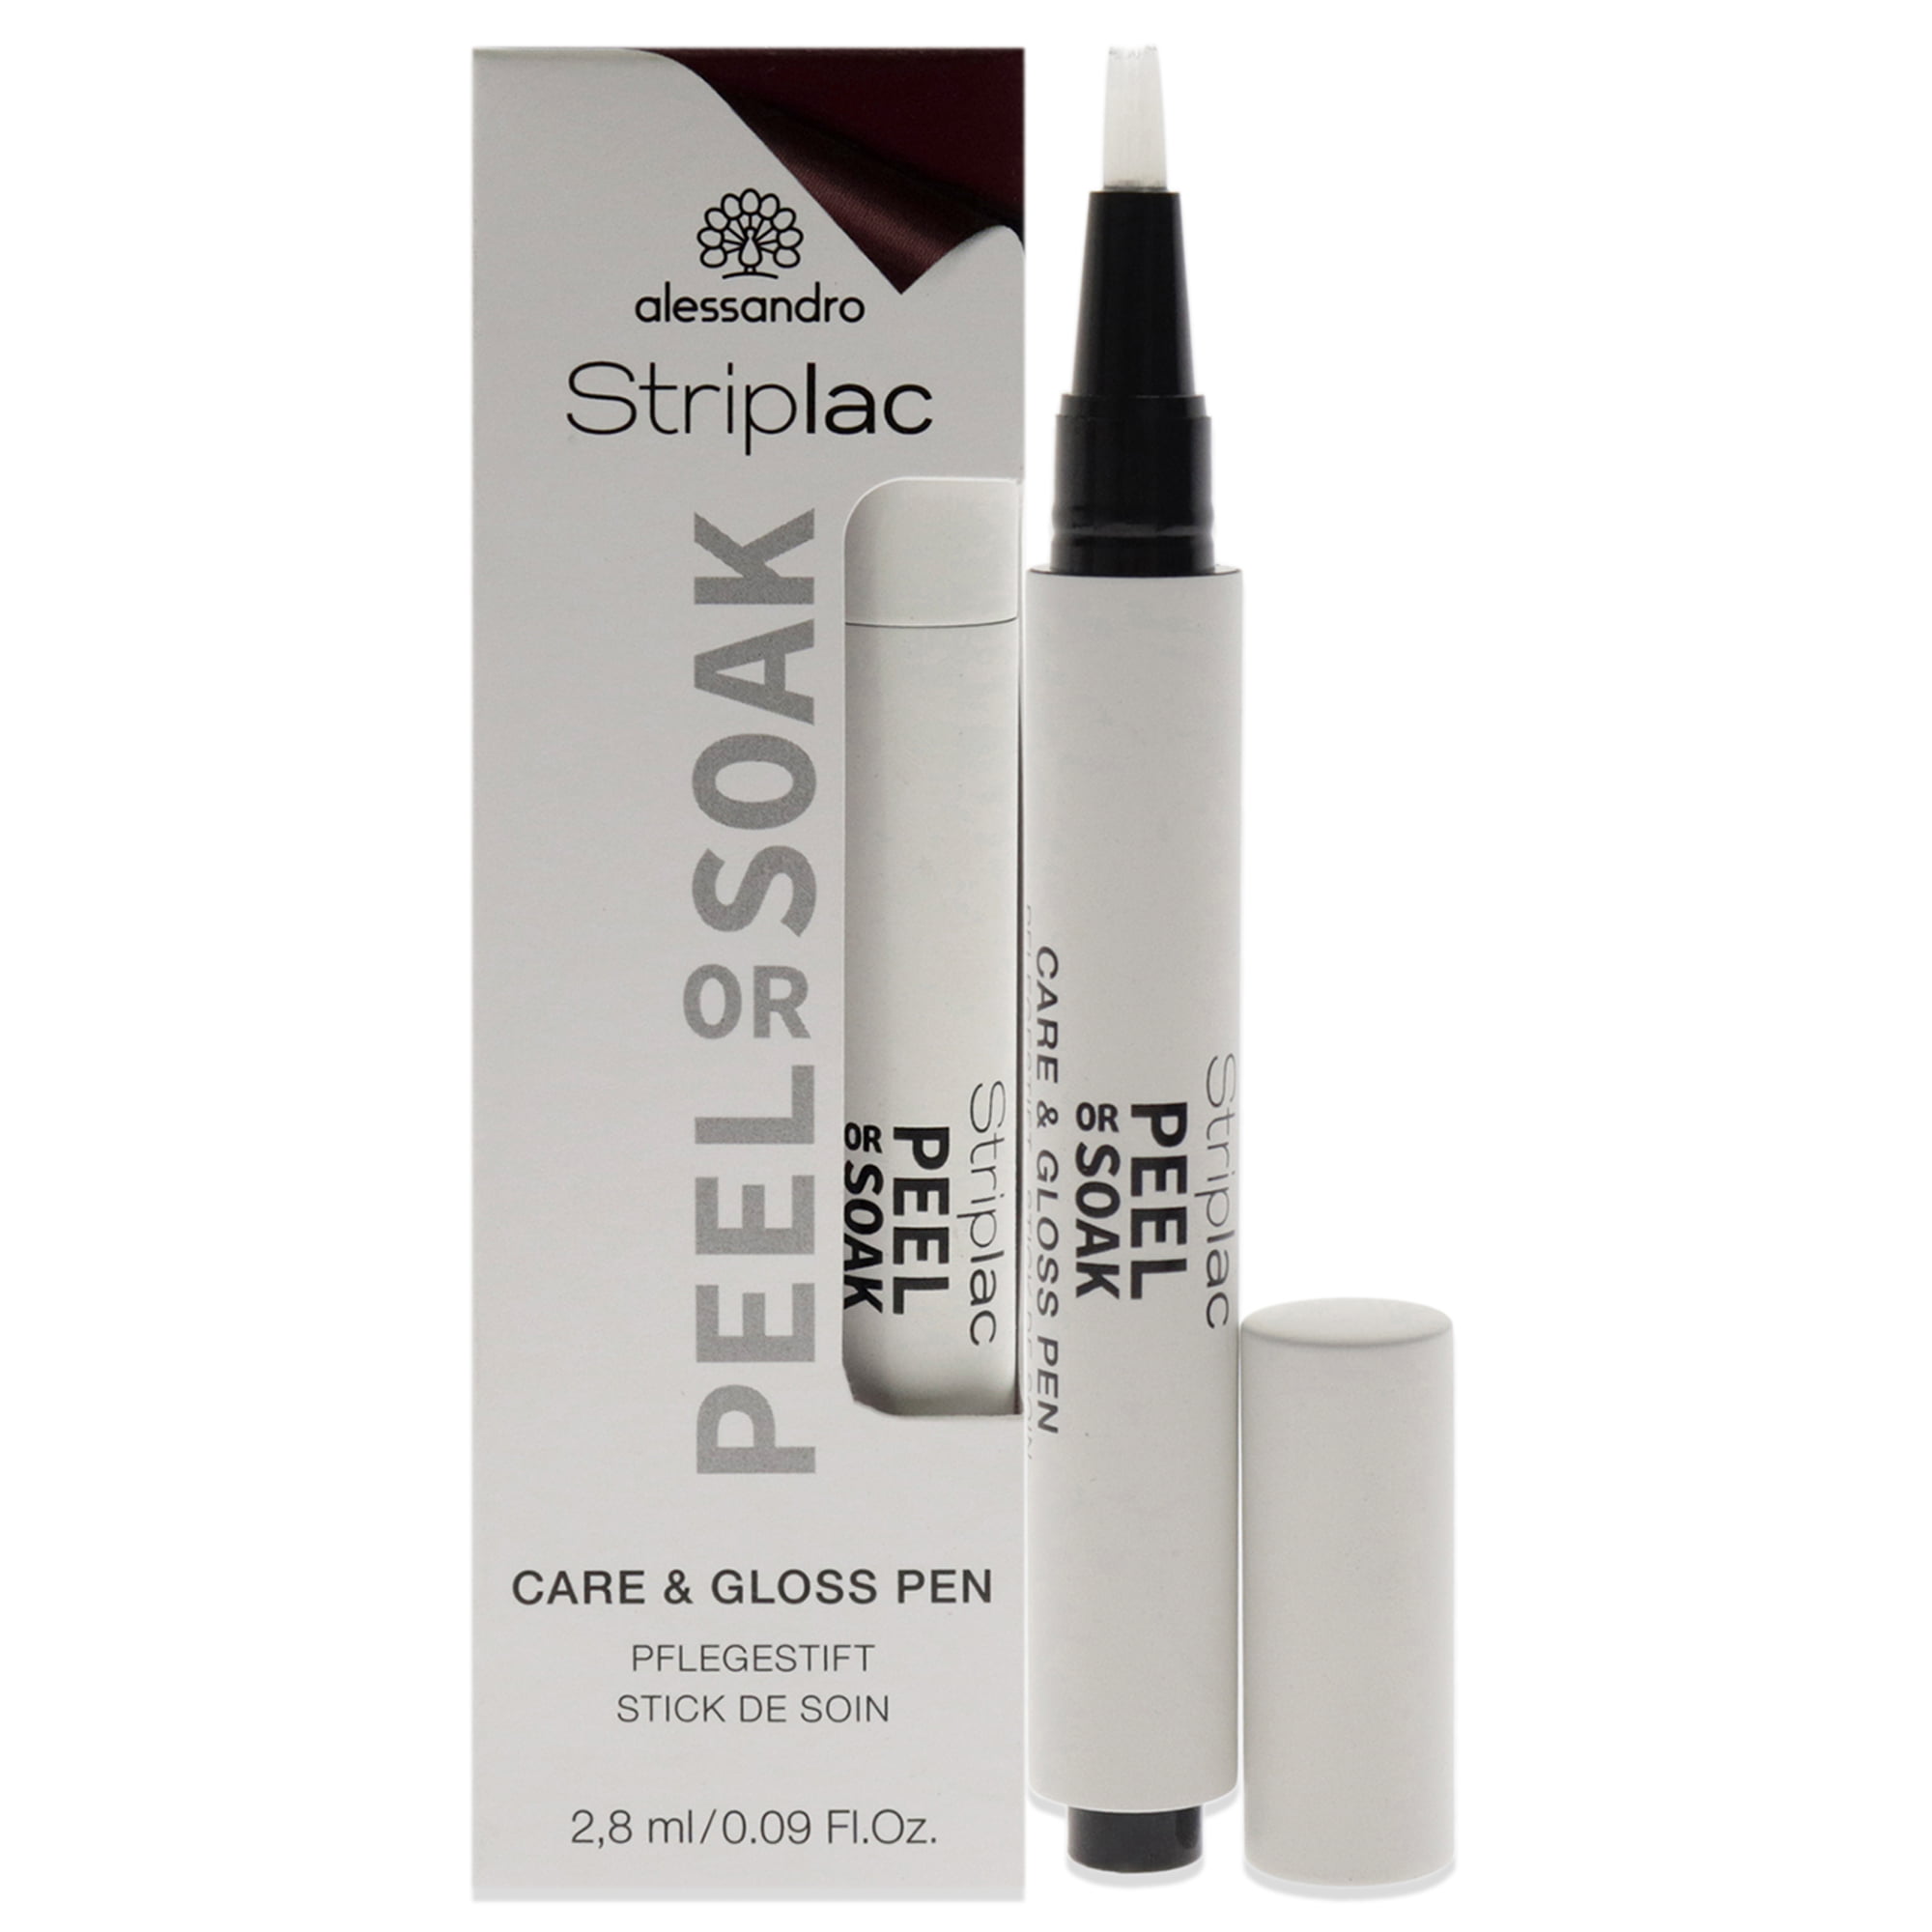 Alessandro Striplac Peel Soak 0.09 Pen, Gloss Treatment Care and oz or